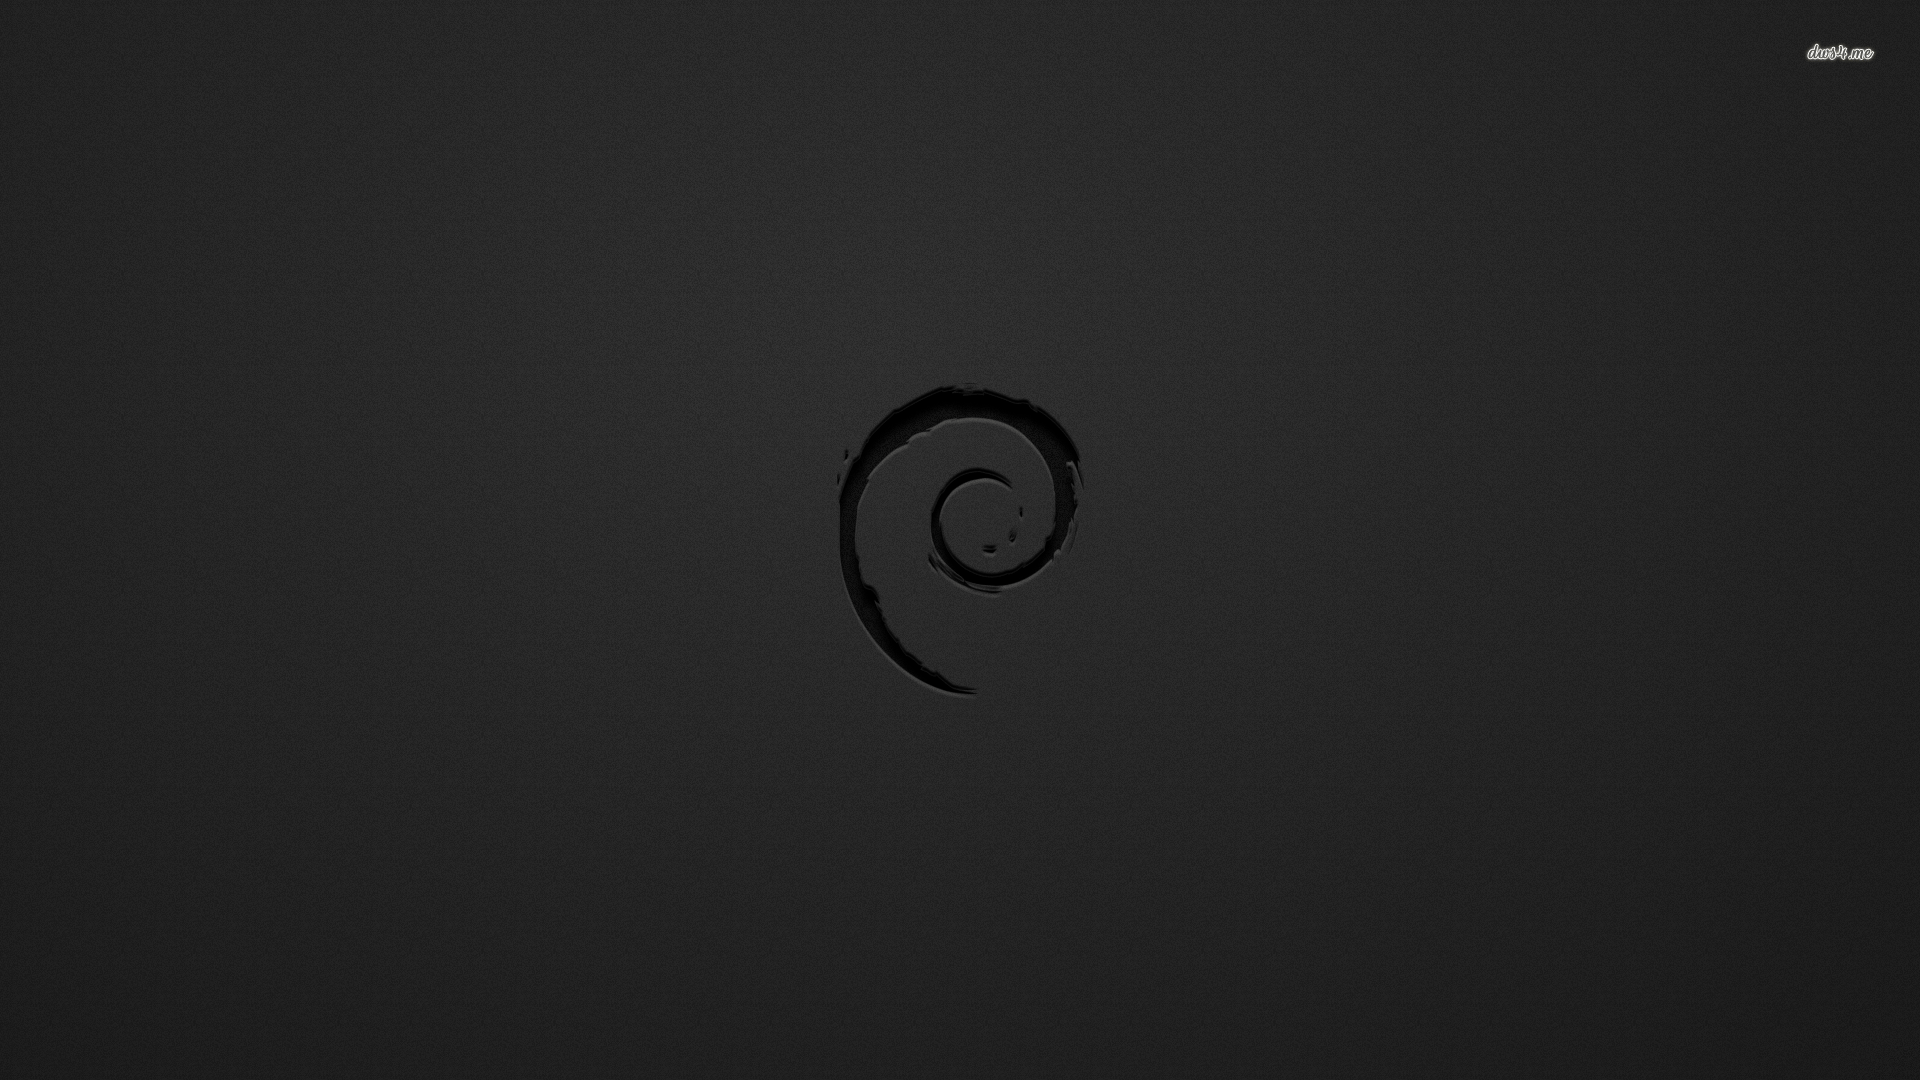 Debian Wallpapers - Wallpaper Cave